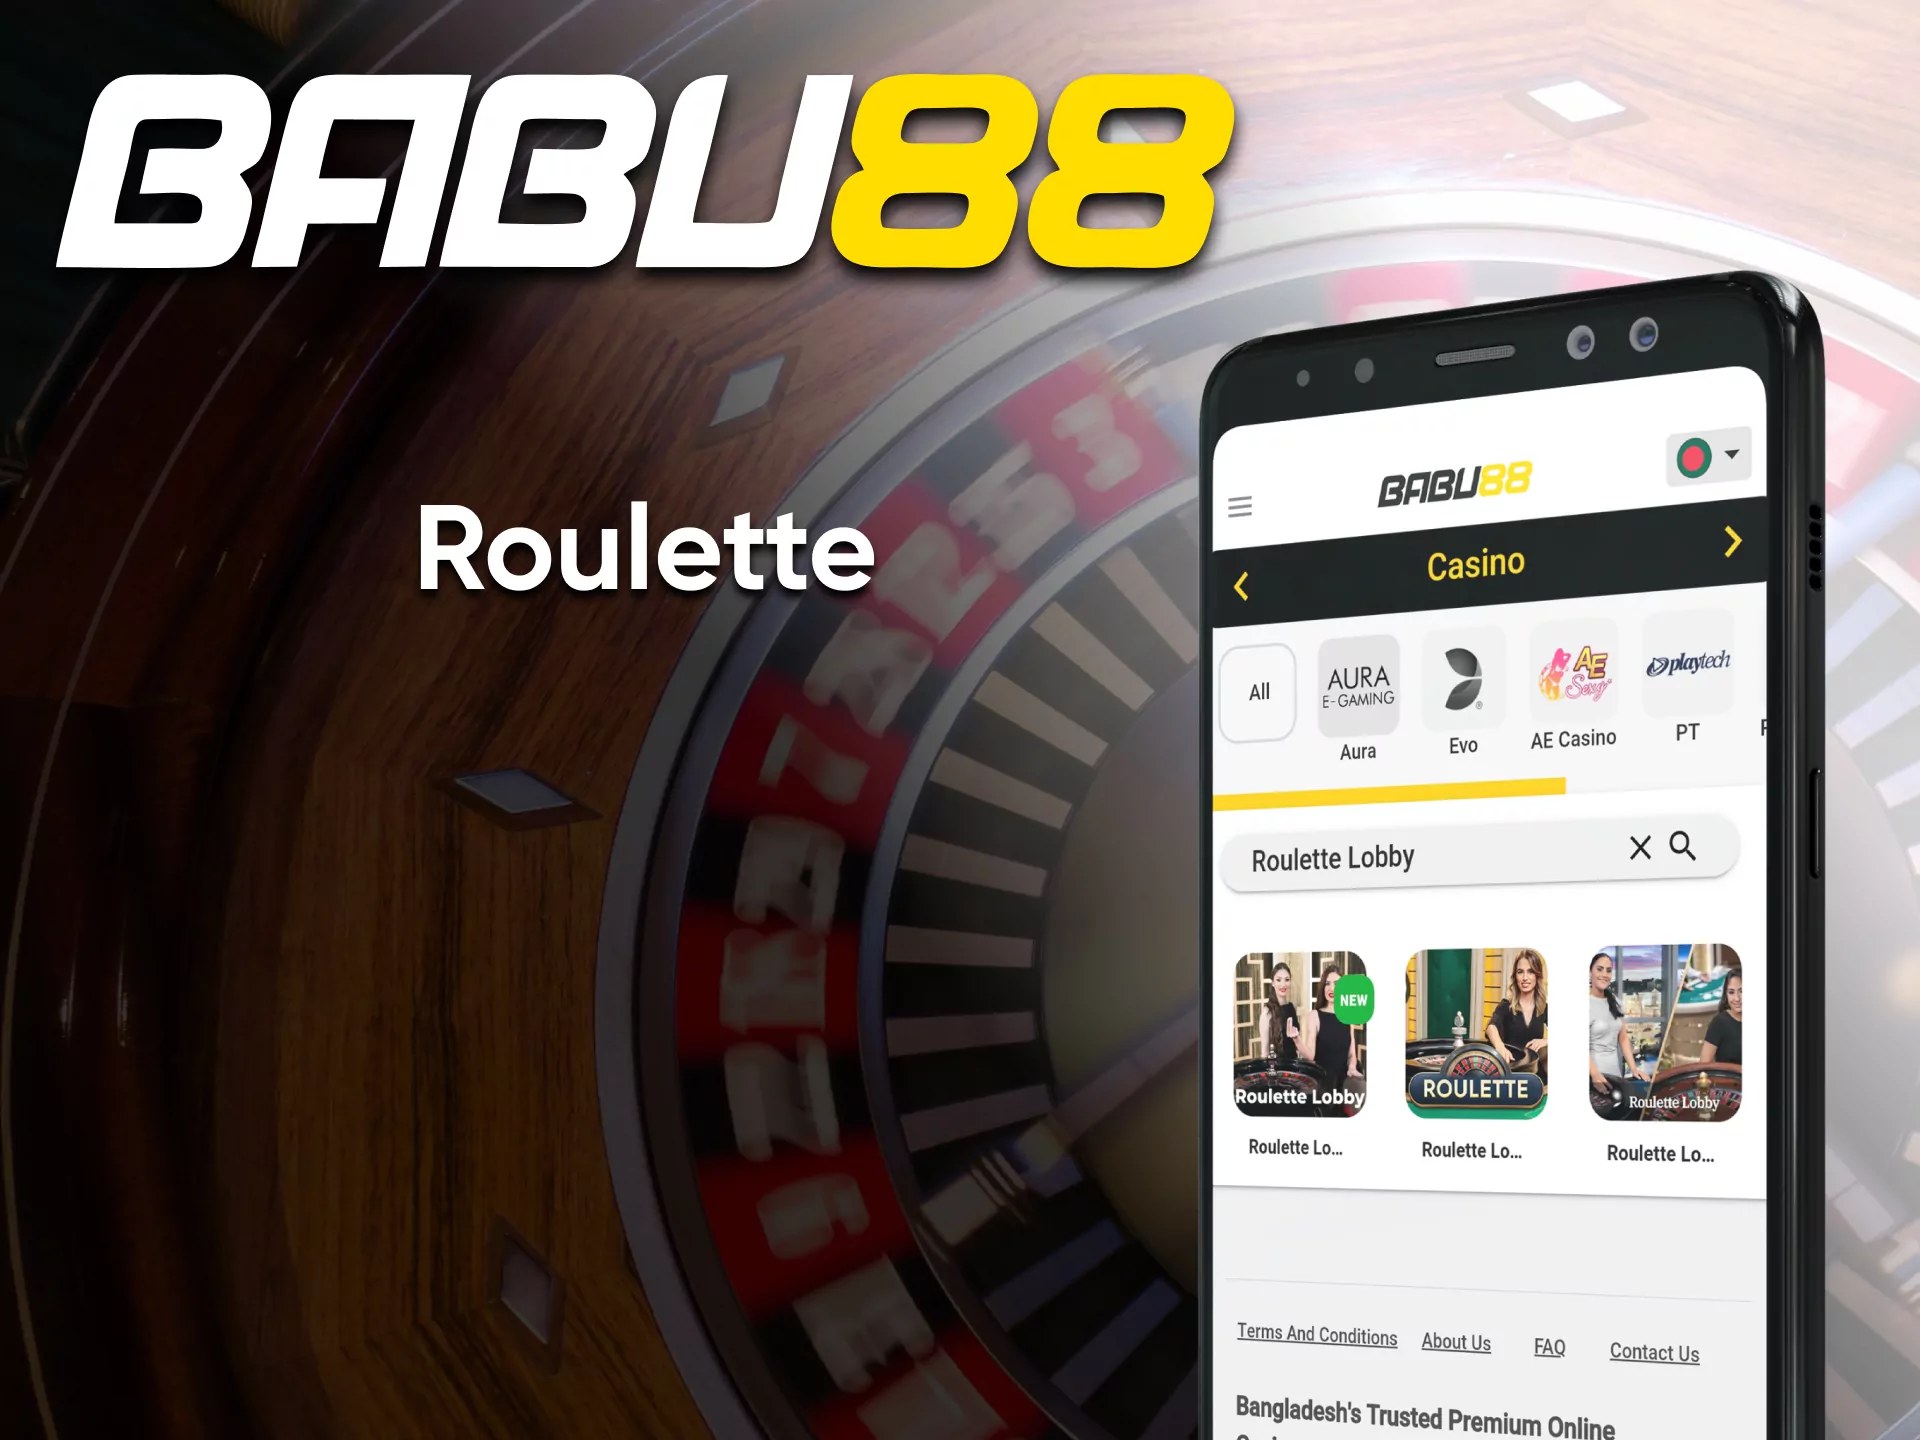 Play Roulette through the Babu88 app.